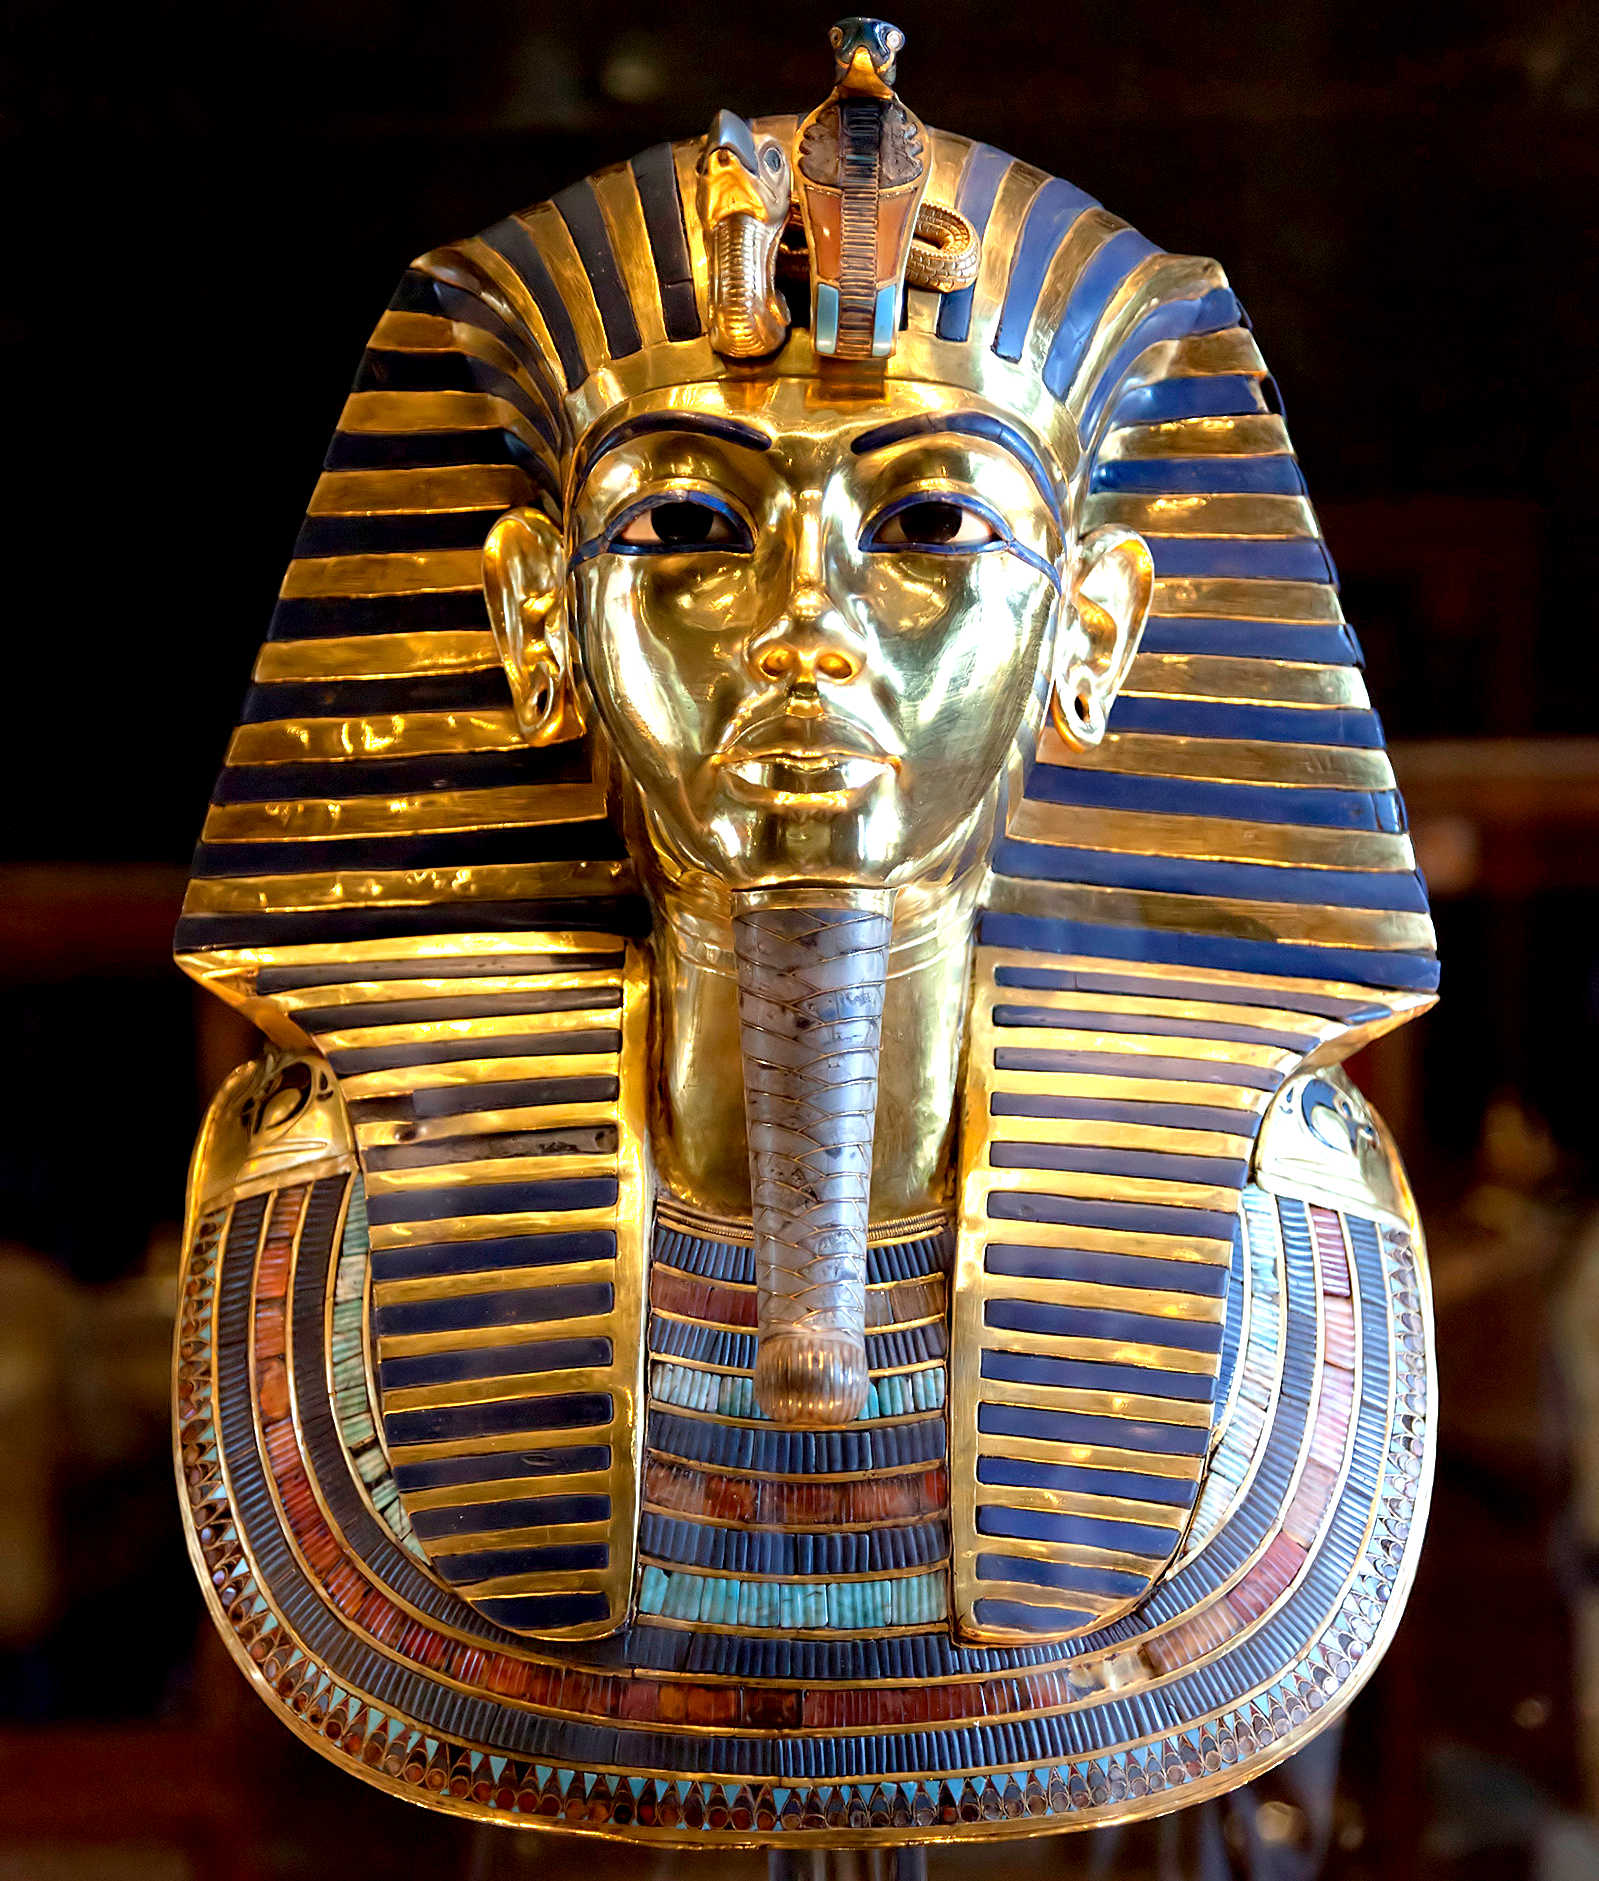 Tutankhamun's golden death mask